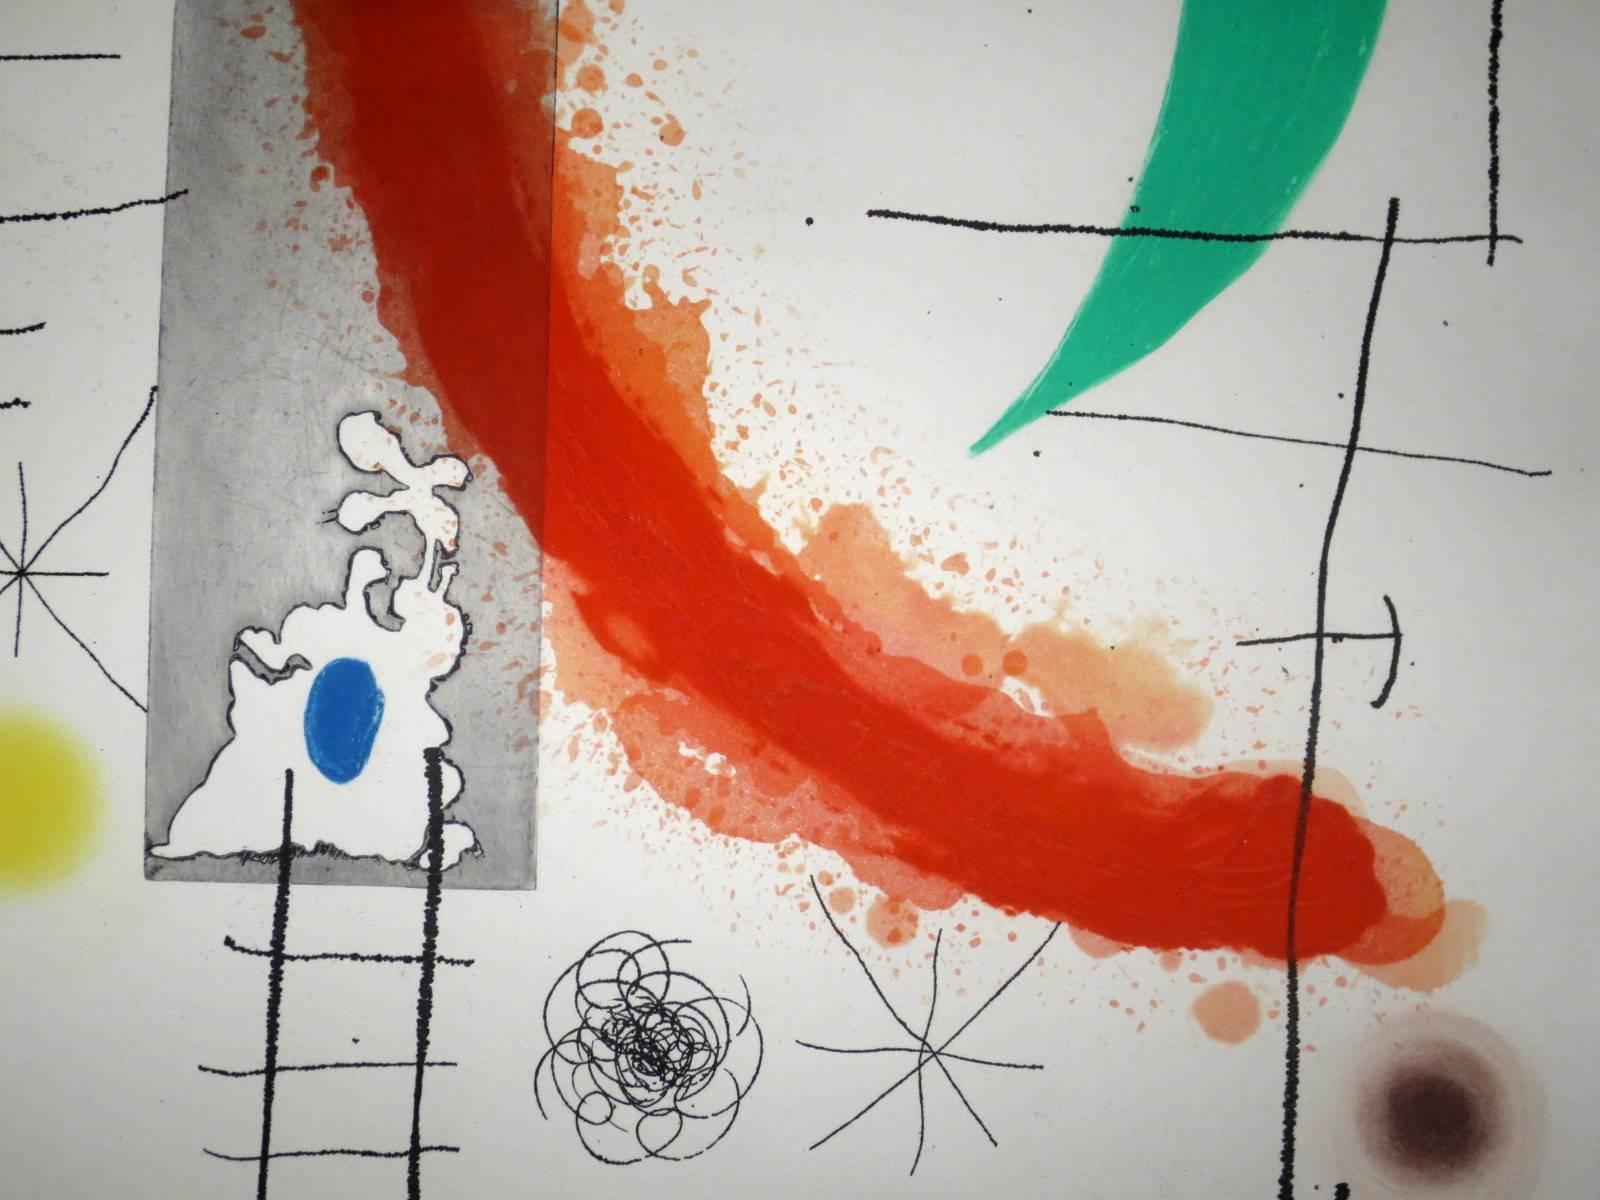 Escalade - Print by Joan Miró